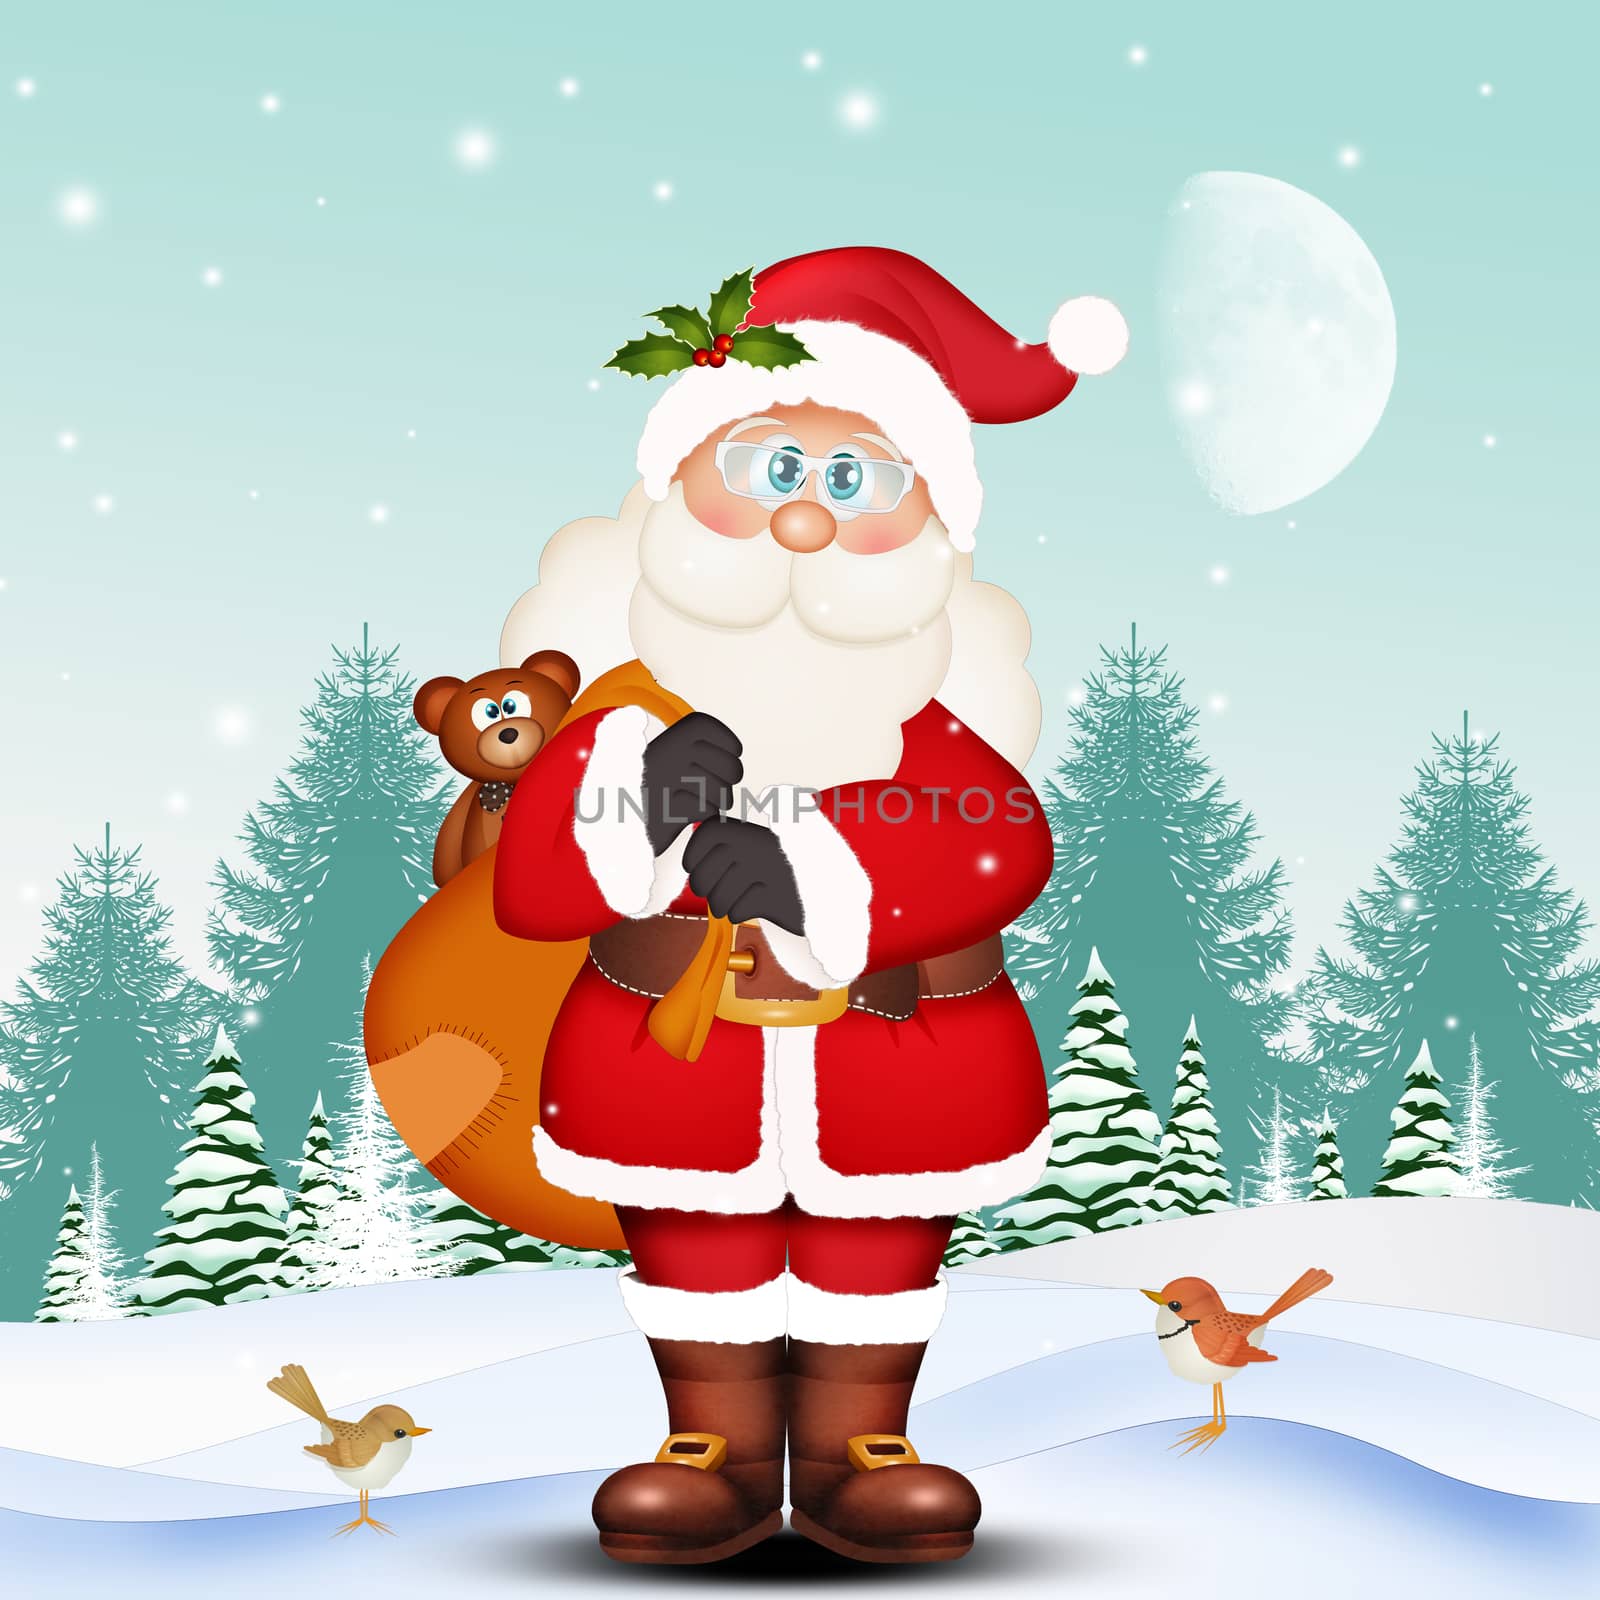 Santa Claus with Christmas gifts by adrenalina